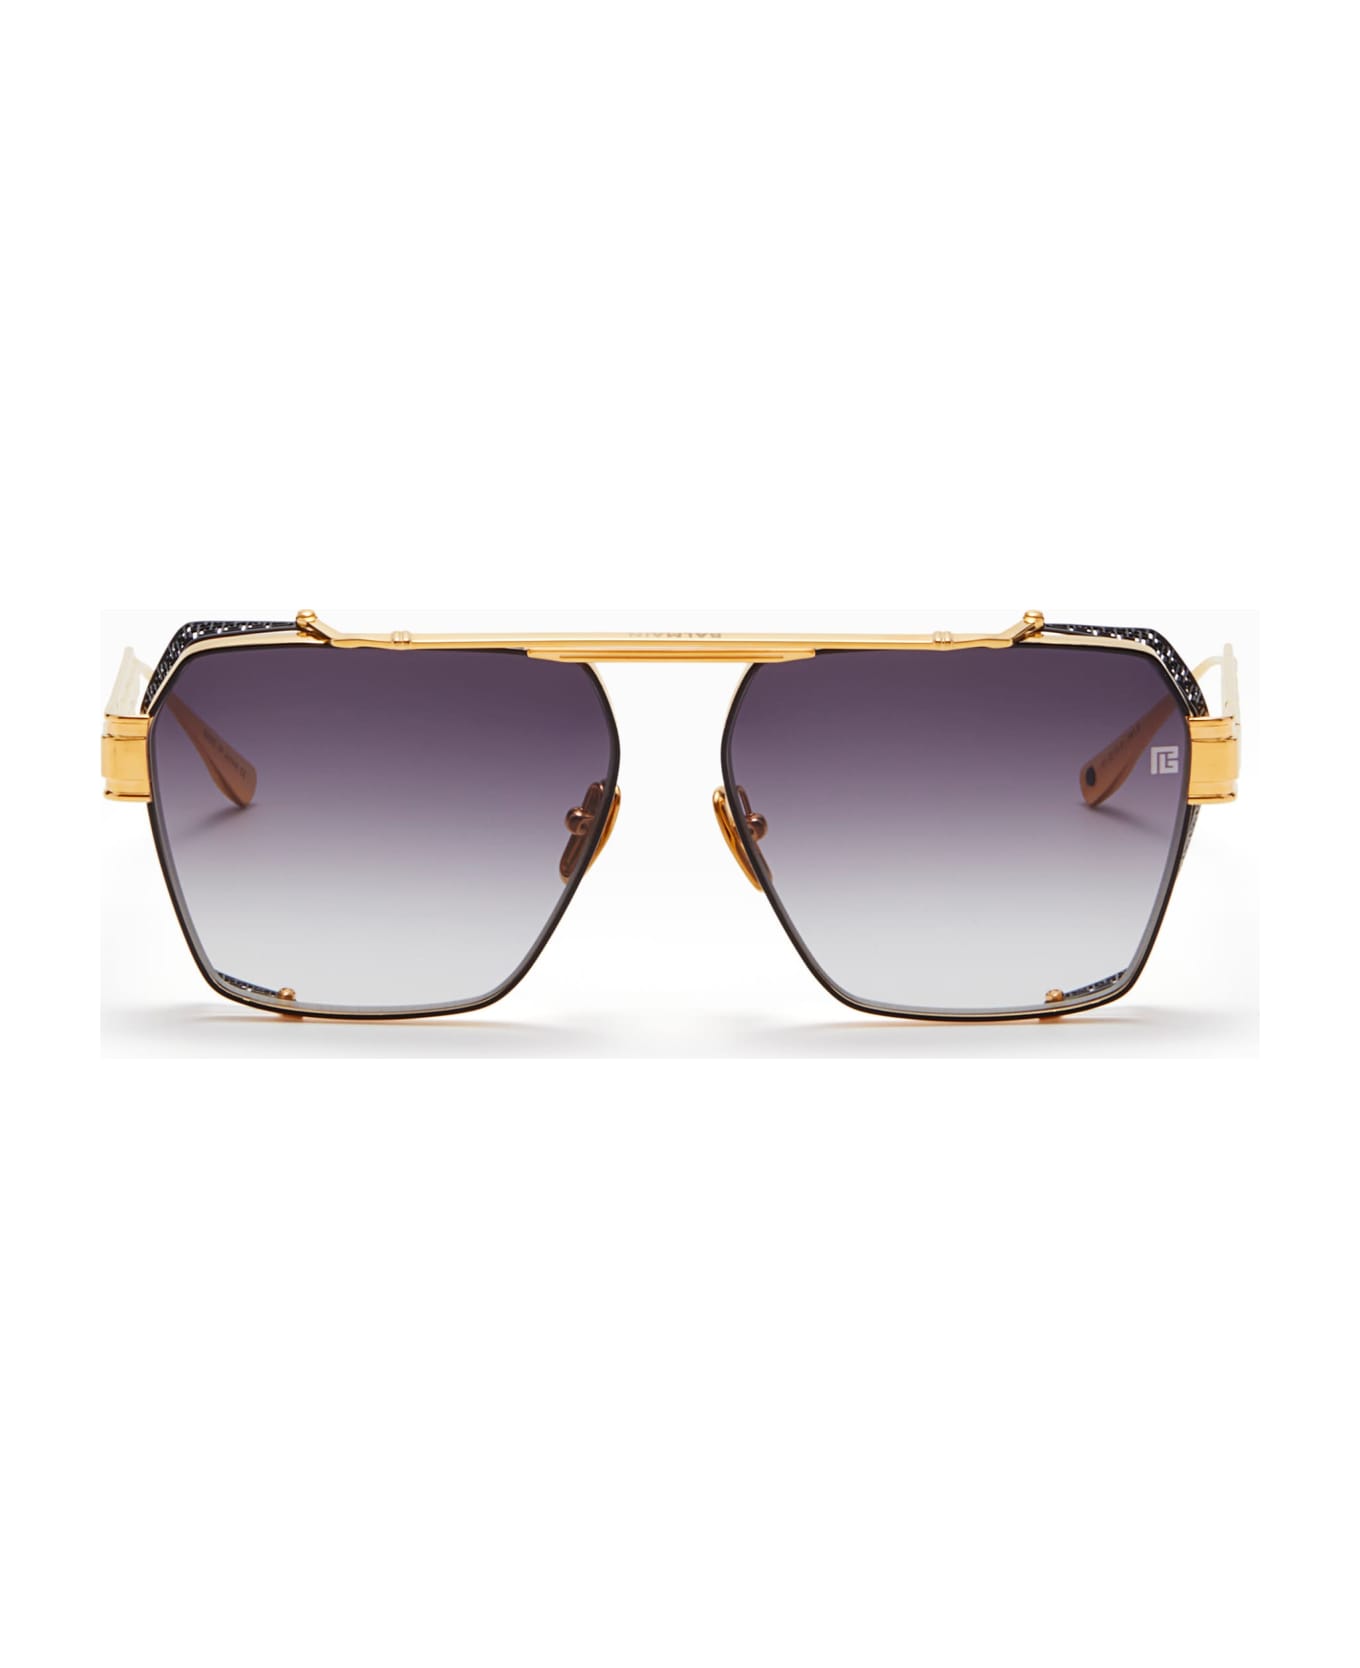 Balmain Premier - Gold Sunglasses - Gold